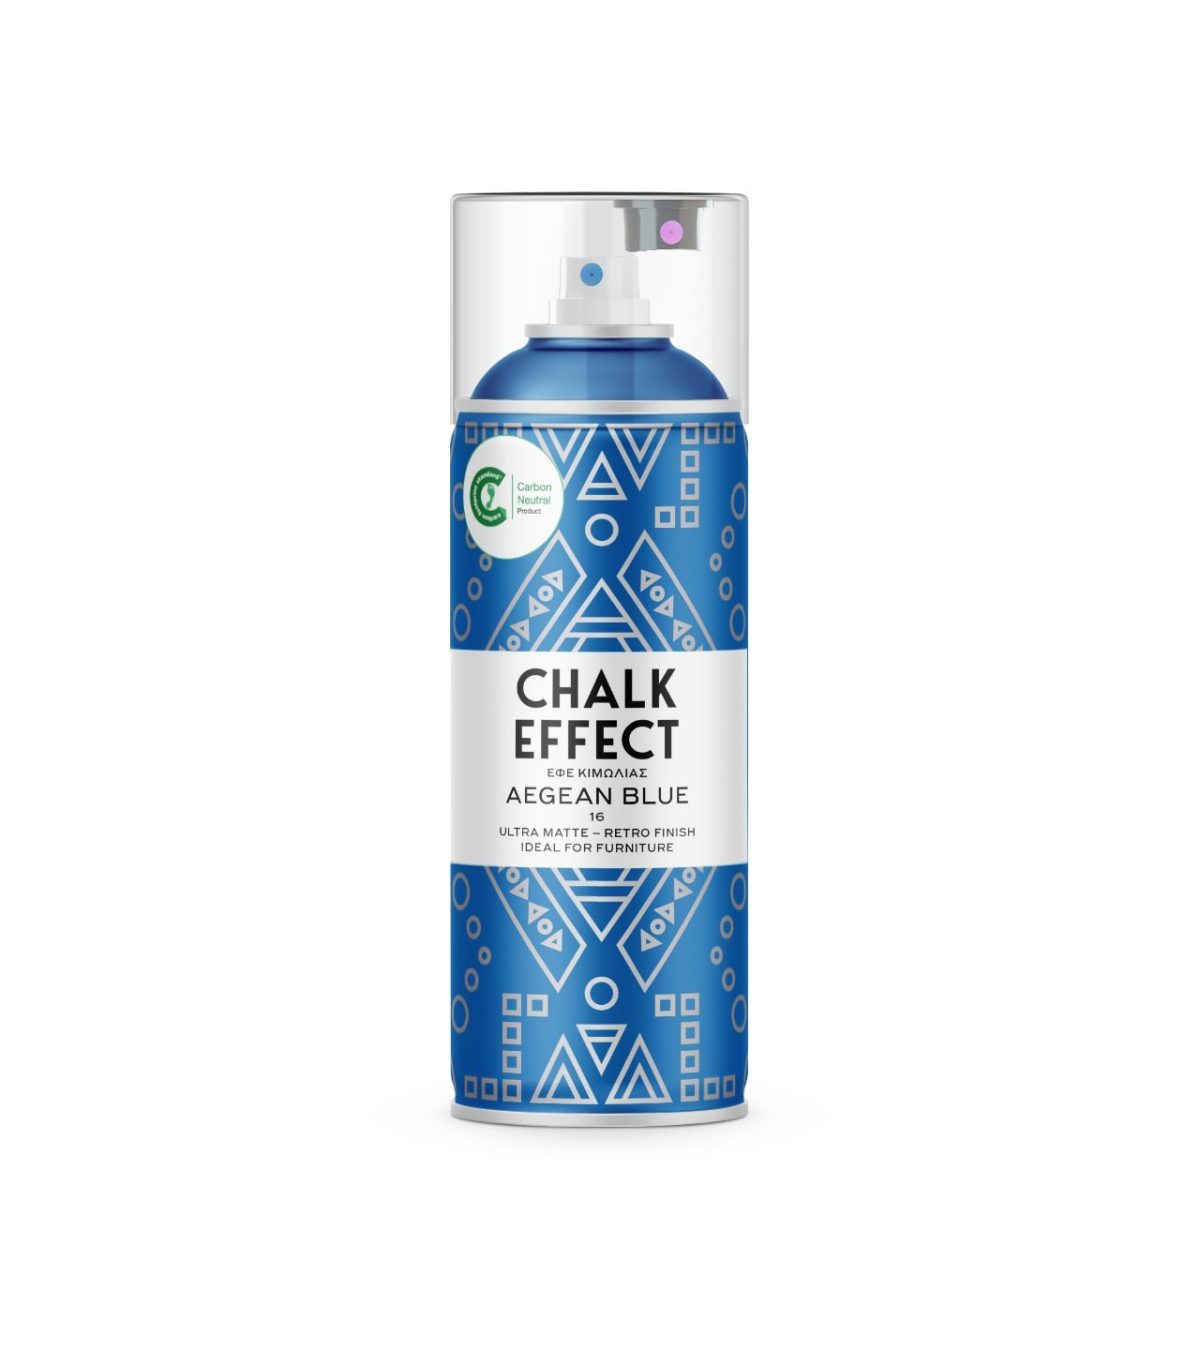 chalk-effect-aegean-blue-cosmos-lac-aerosol-spray-paint-acrylic-diy-upscale-wood-decor-interior-exterior-inhouse-design-decorati-1280x1440-crop